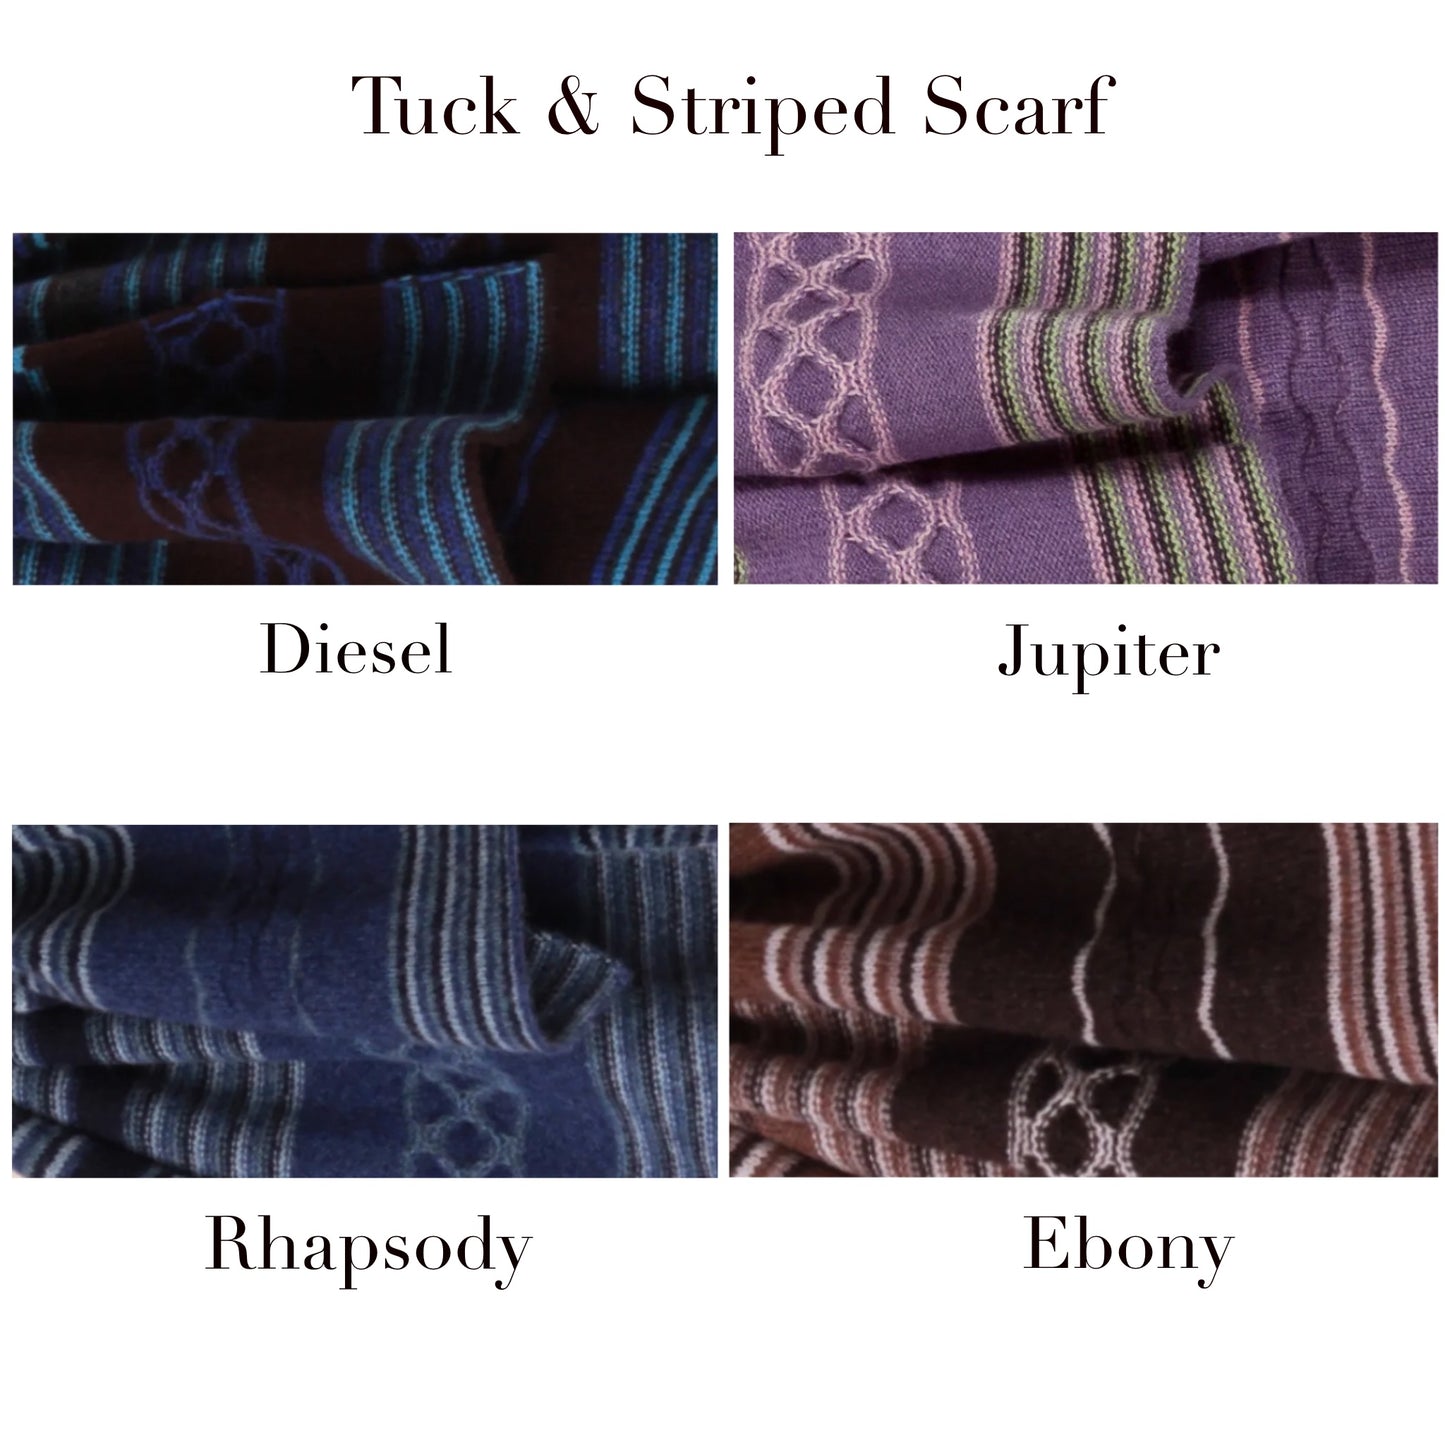 Tuck & Striped Scarf